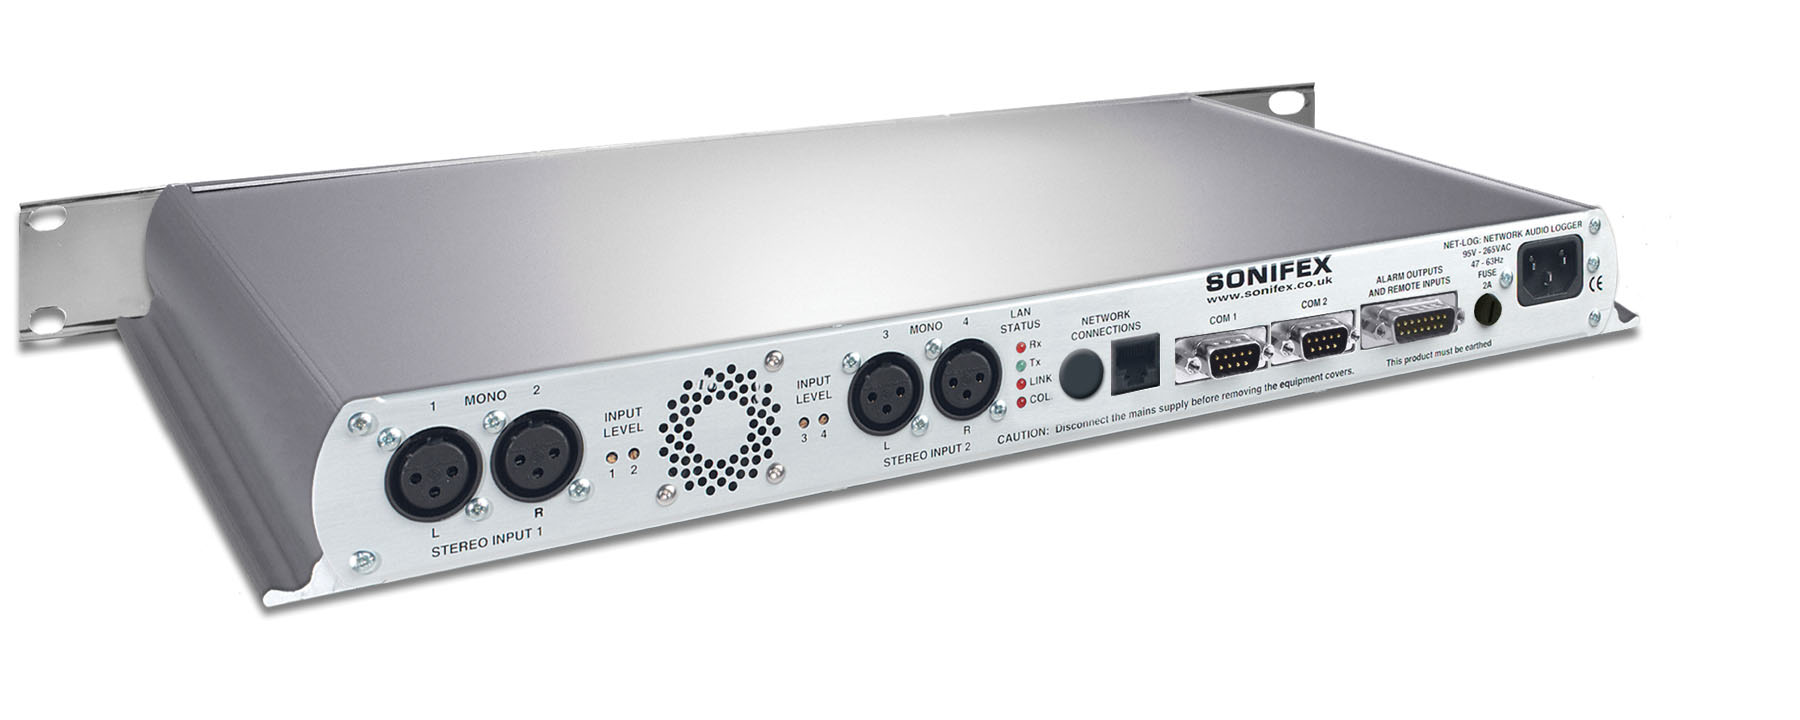 Tascam HS-20. Sonifex cm-cu21 комментаторский блок. Nr-700nt. Sonifex Audio Control. Control channel